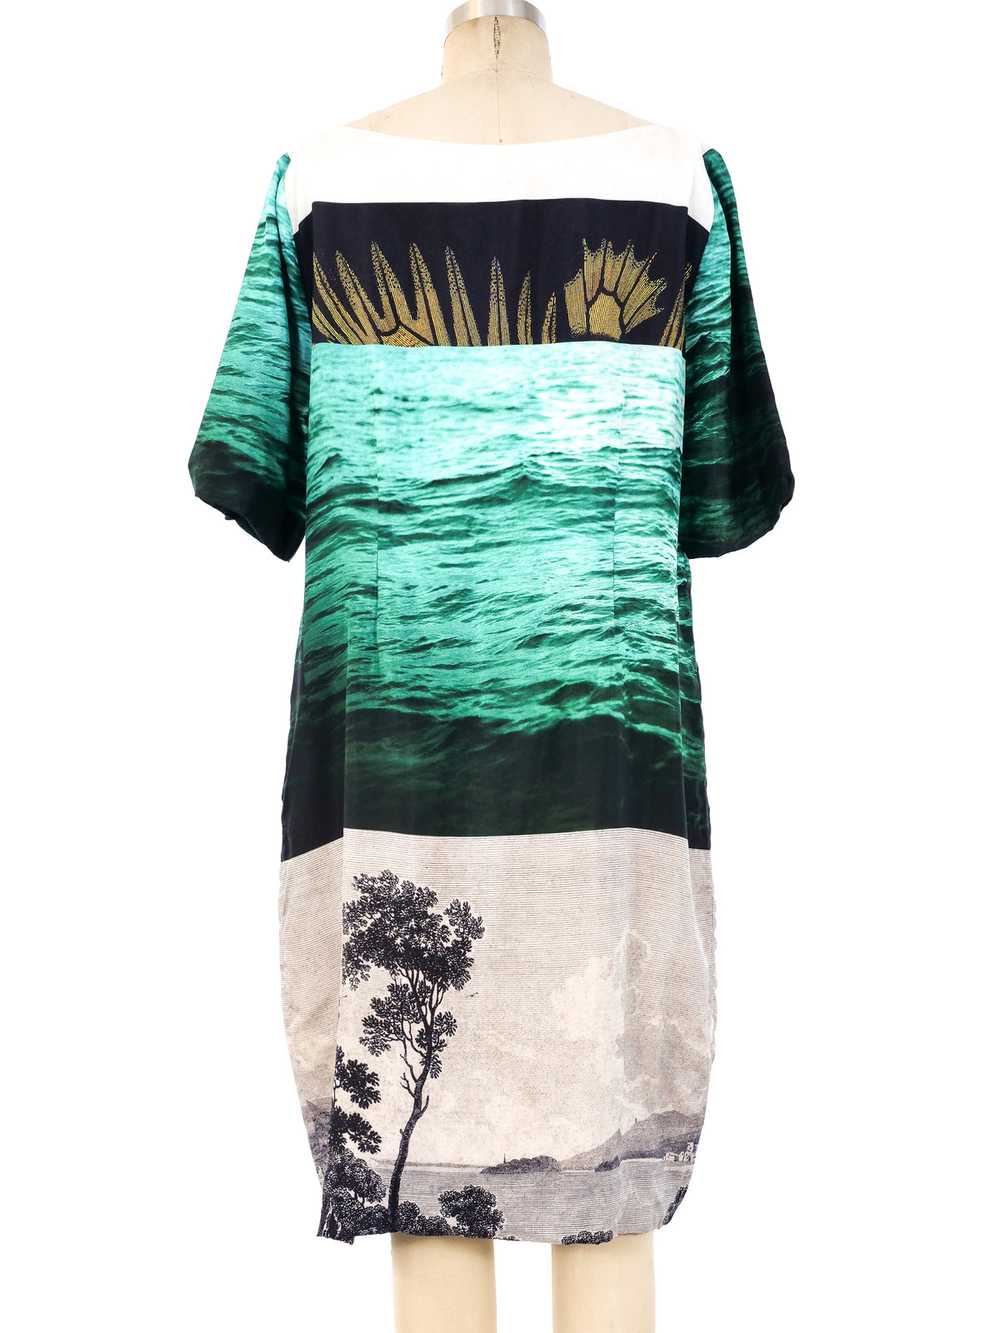 Dries Van Noten Water Motif Printed Shift Dress - image 3